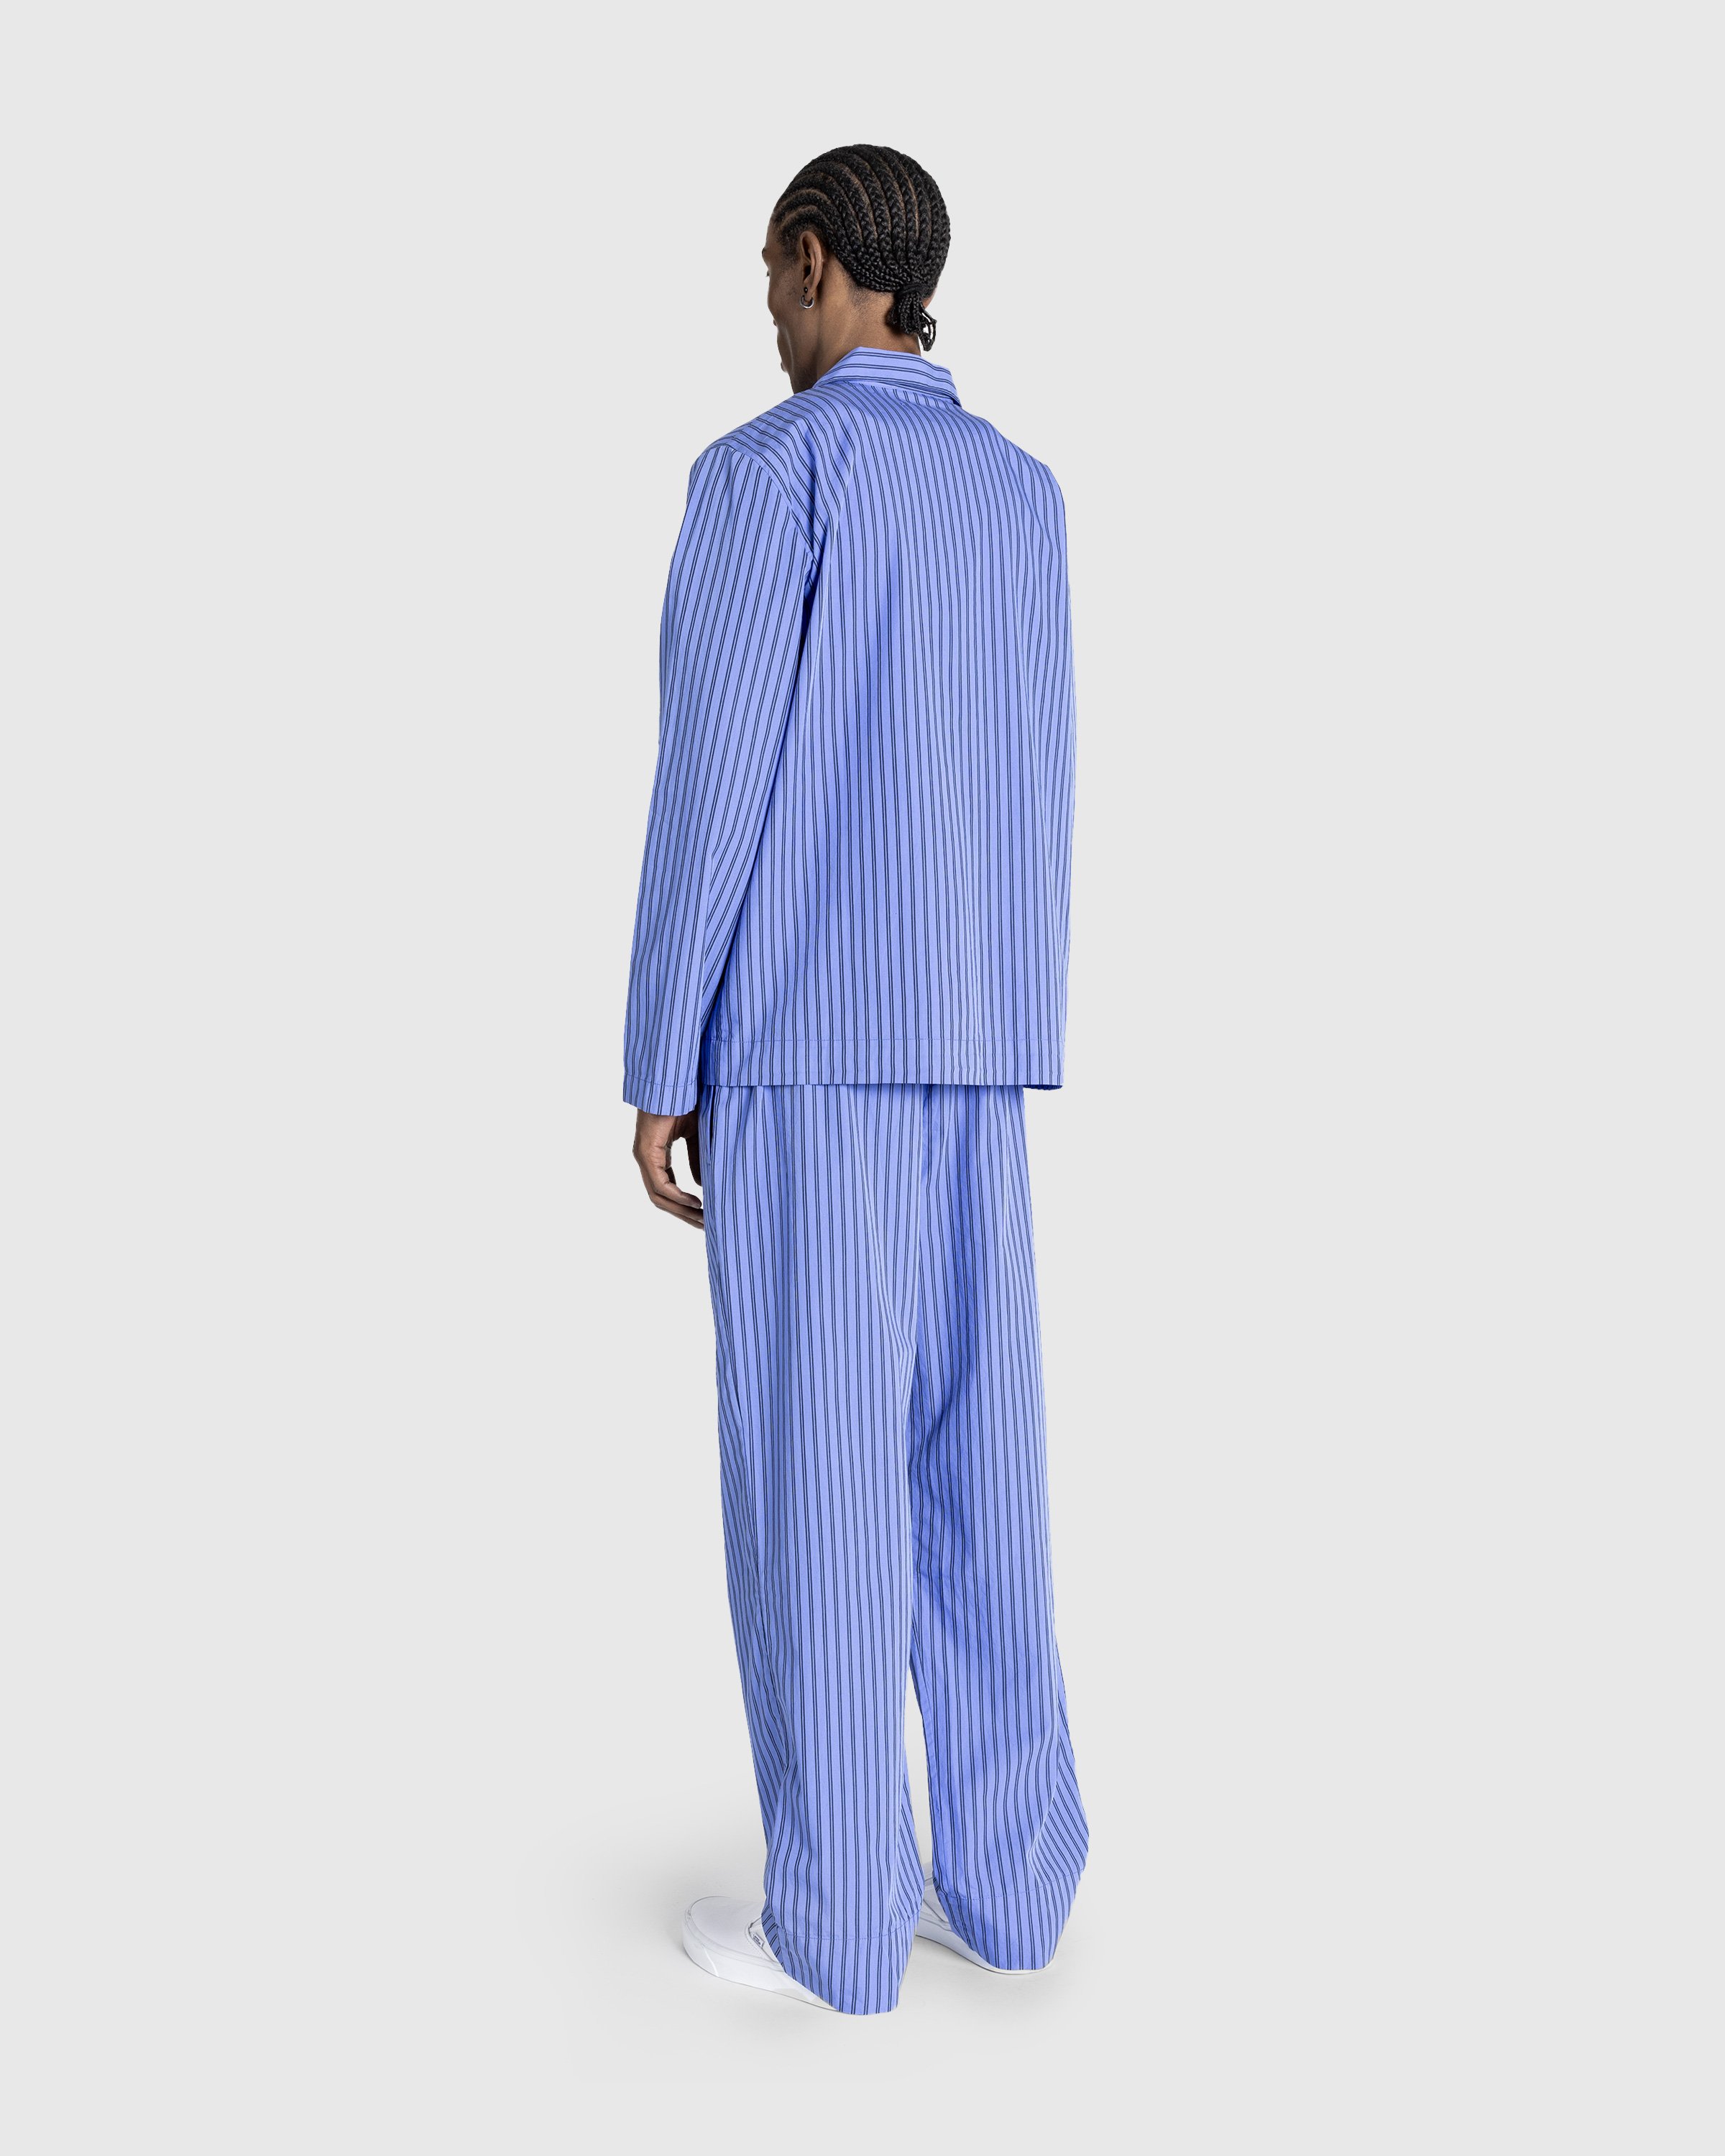 Tekla - Cotton Poplin - Pyjamas Shirt Boro Stripes - Clothing - Blue - Image 4